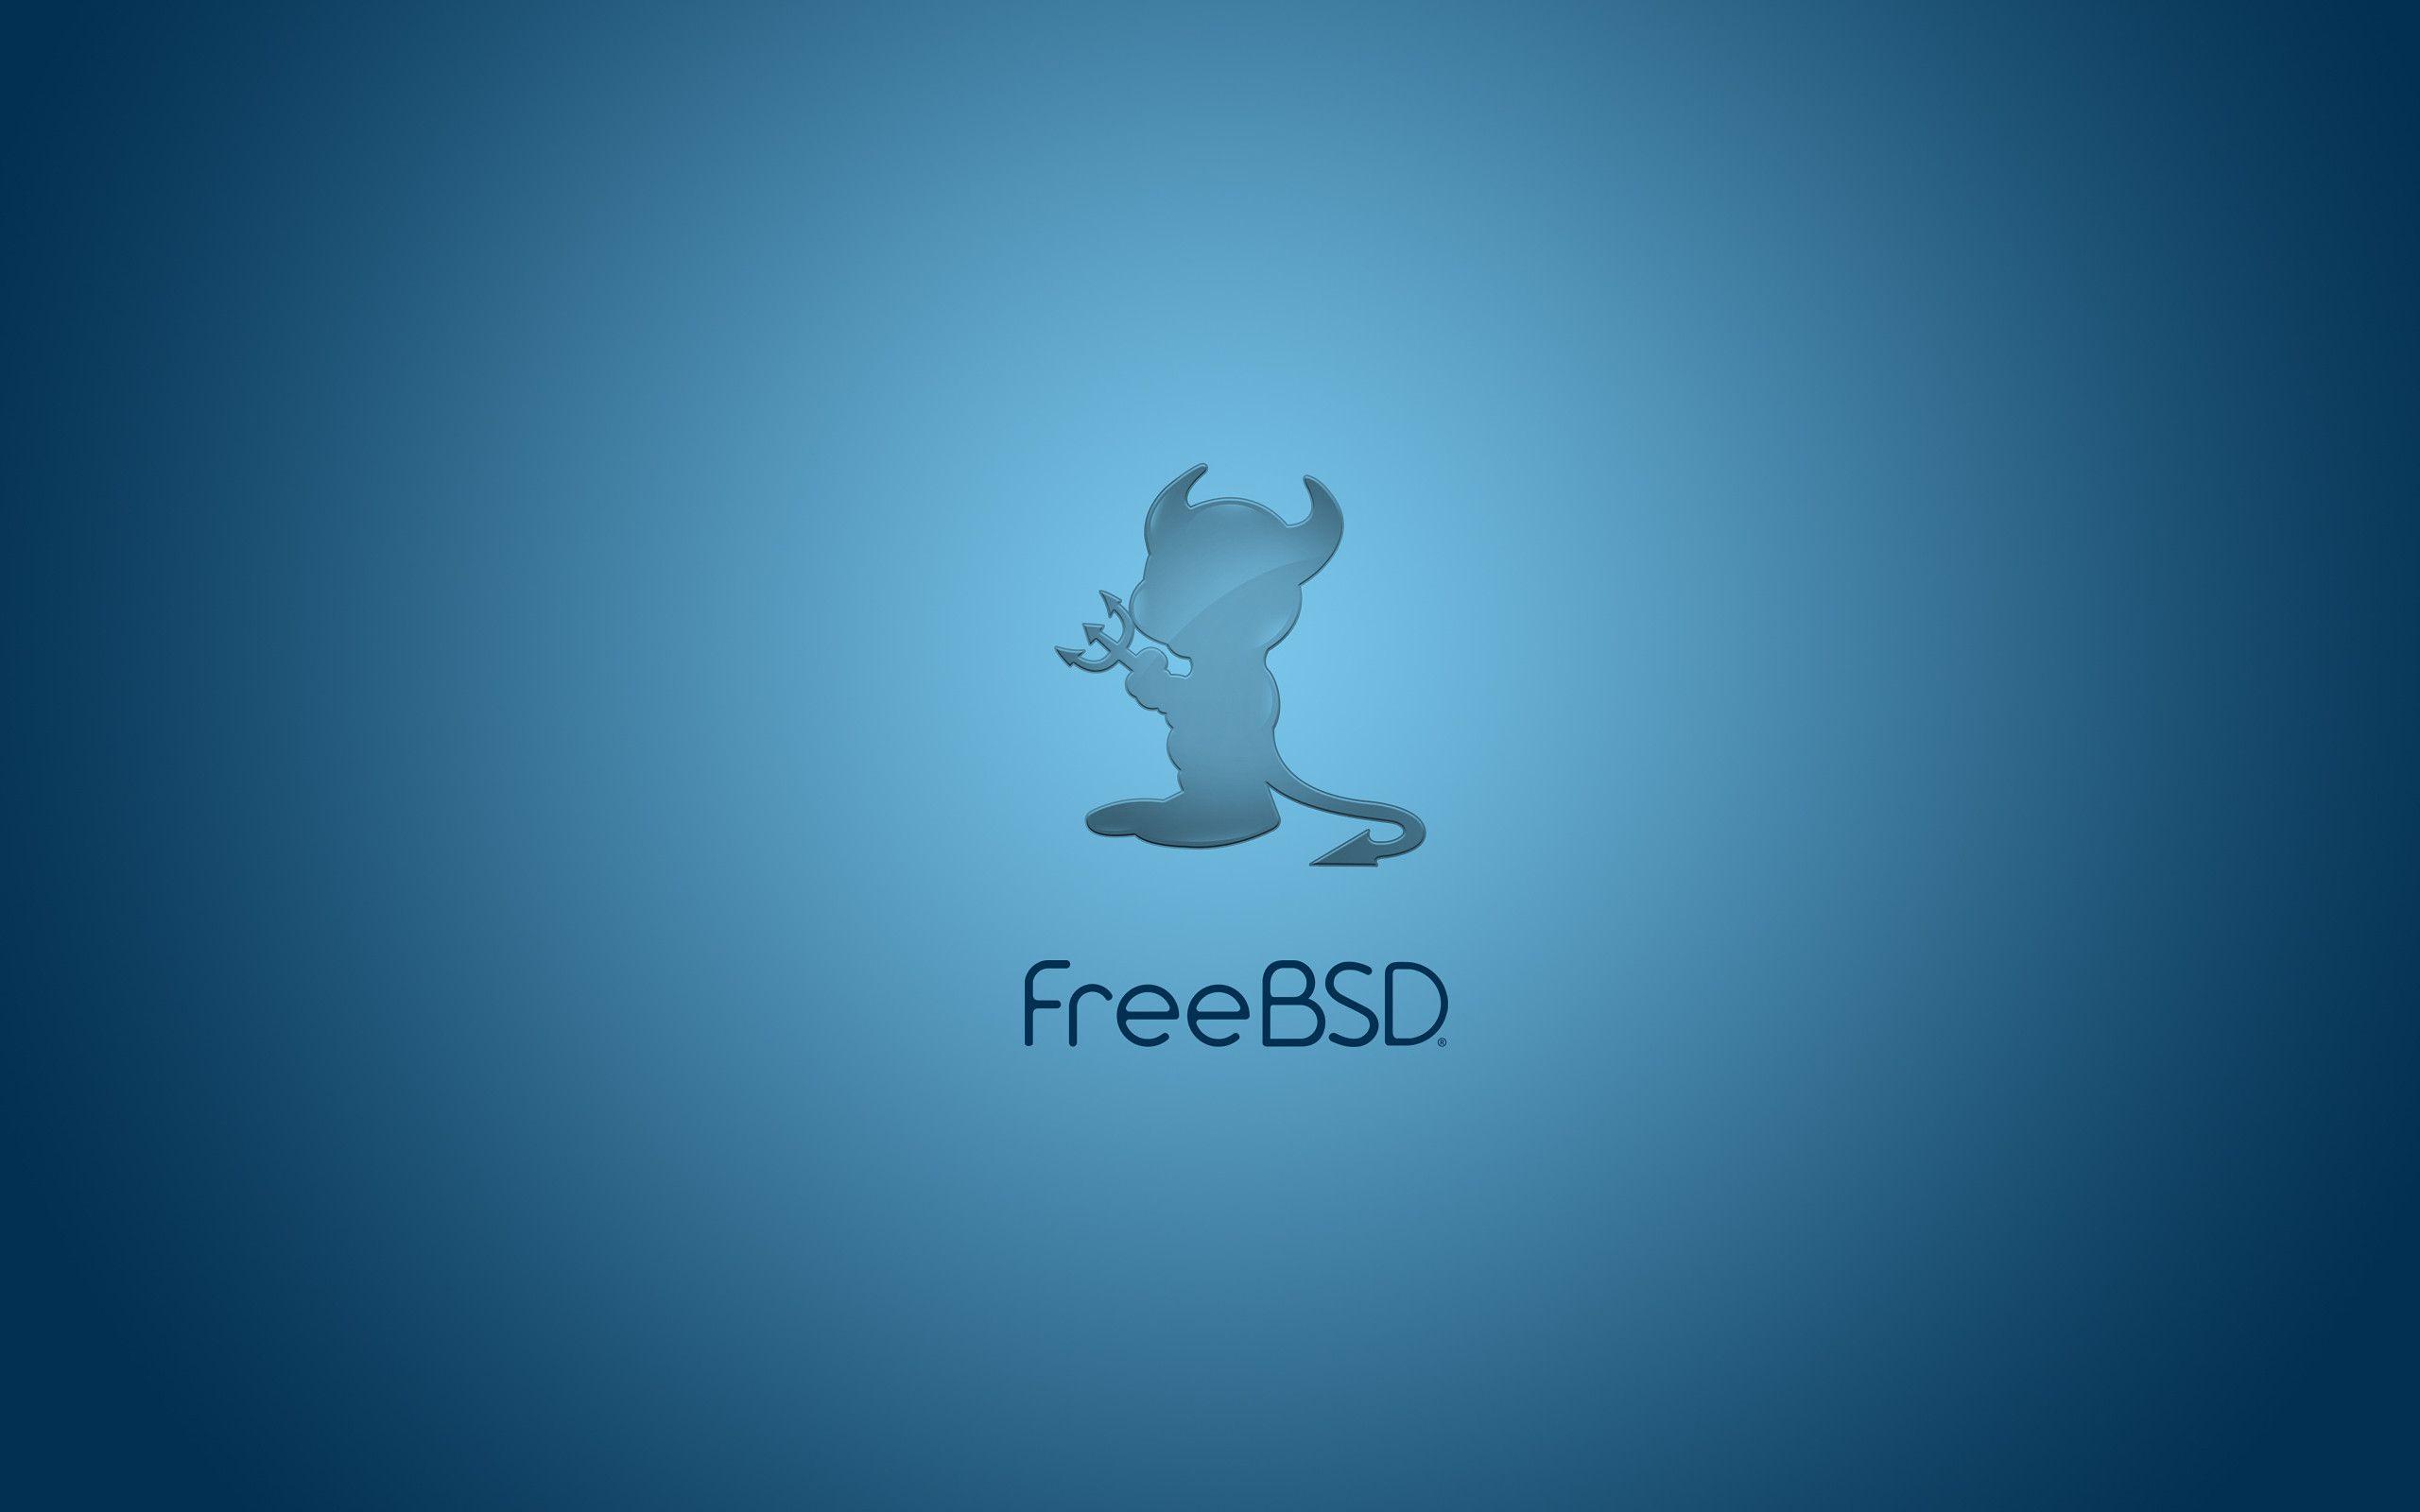 AmazingPict.com. FreeBSD Blue Wallpaper